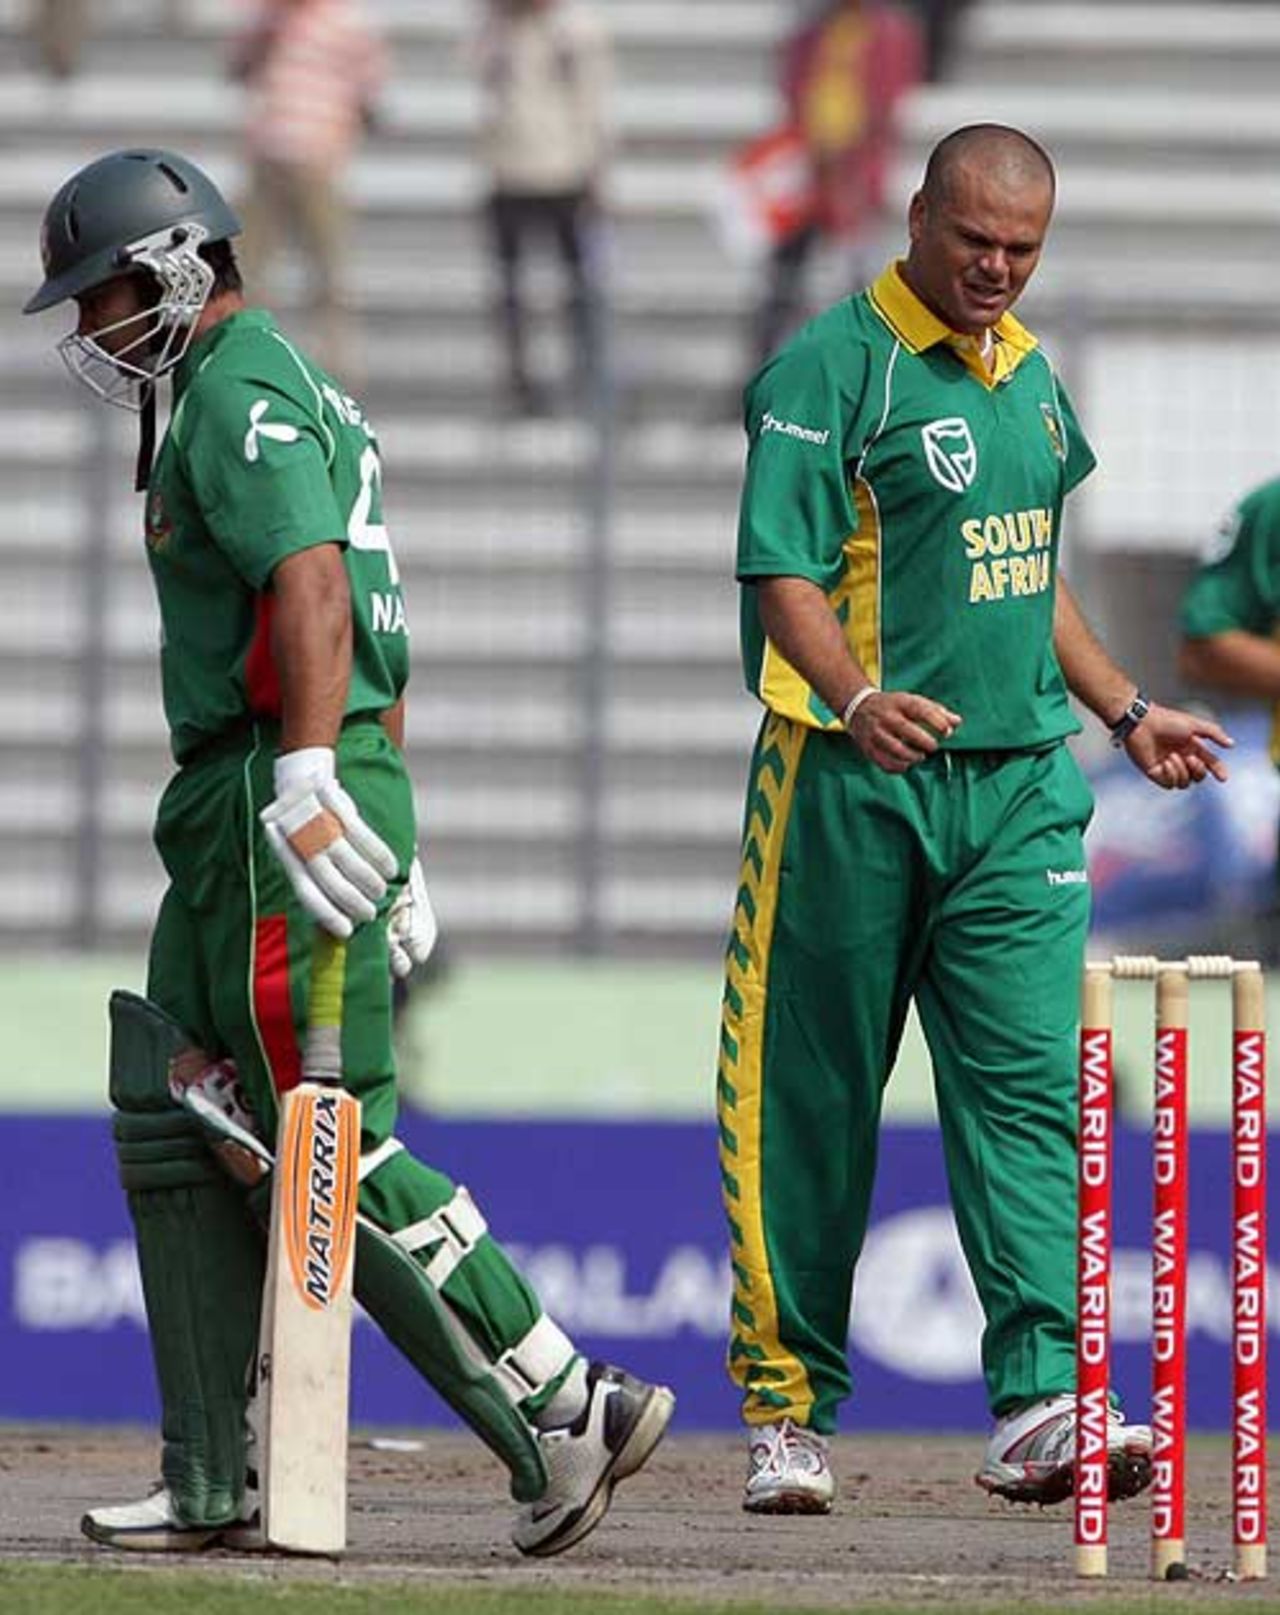 Charl Langeveldt sends Nazimuddin on his way, Bangladesh v South Africa, 2nd ODI, Mirpur, March 12, 2008